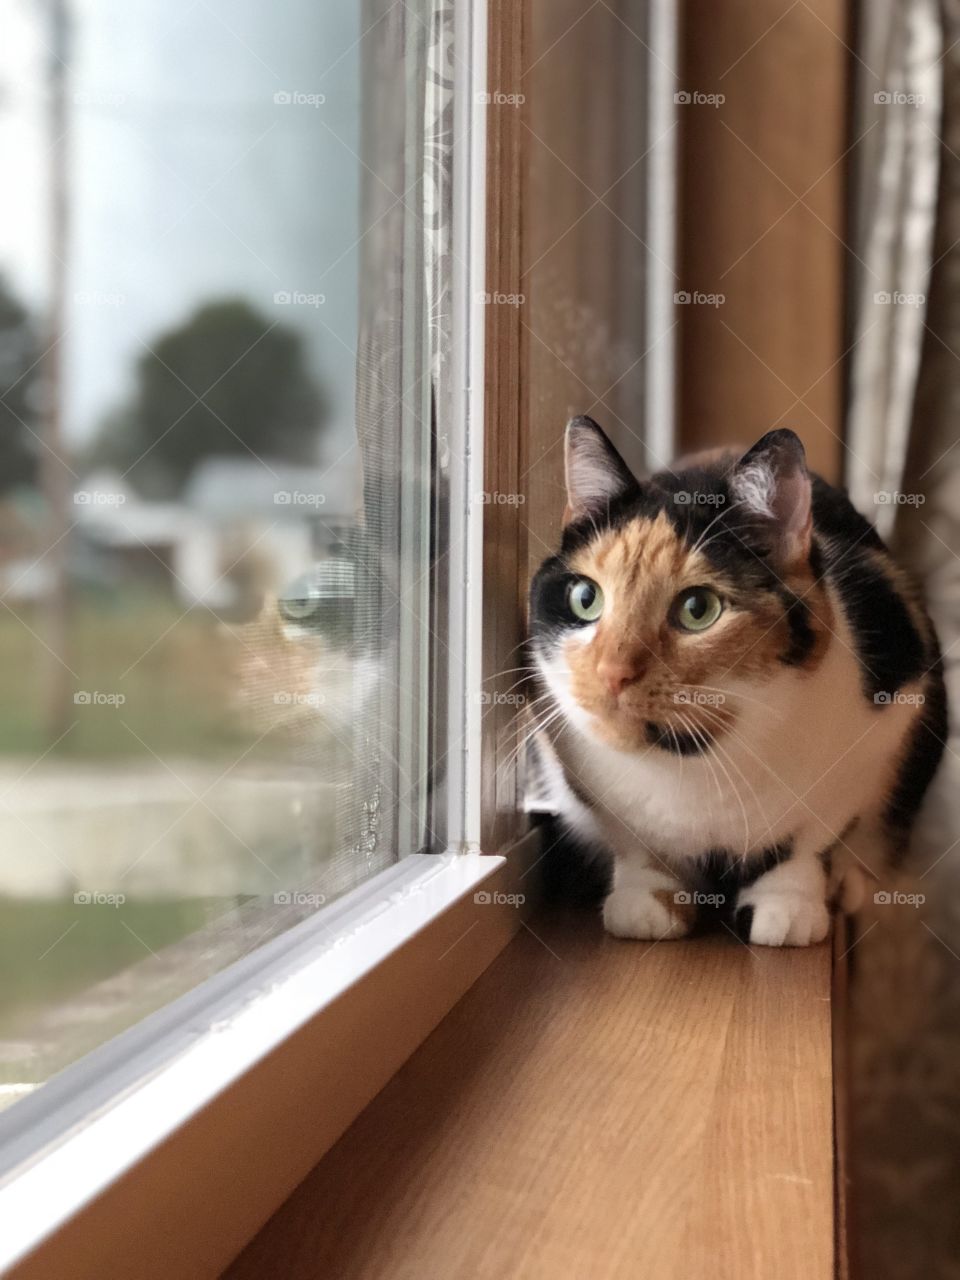 Cat portrait with reflection 